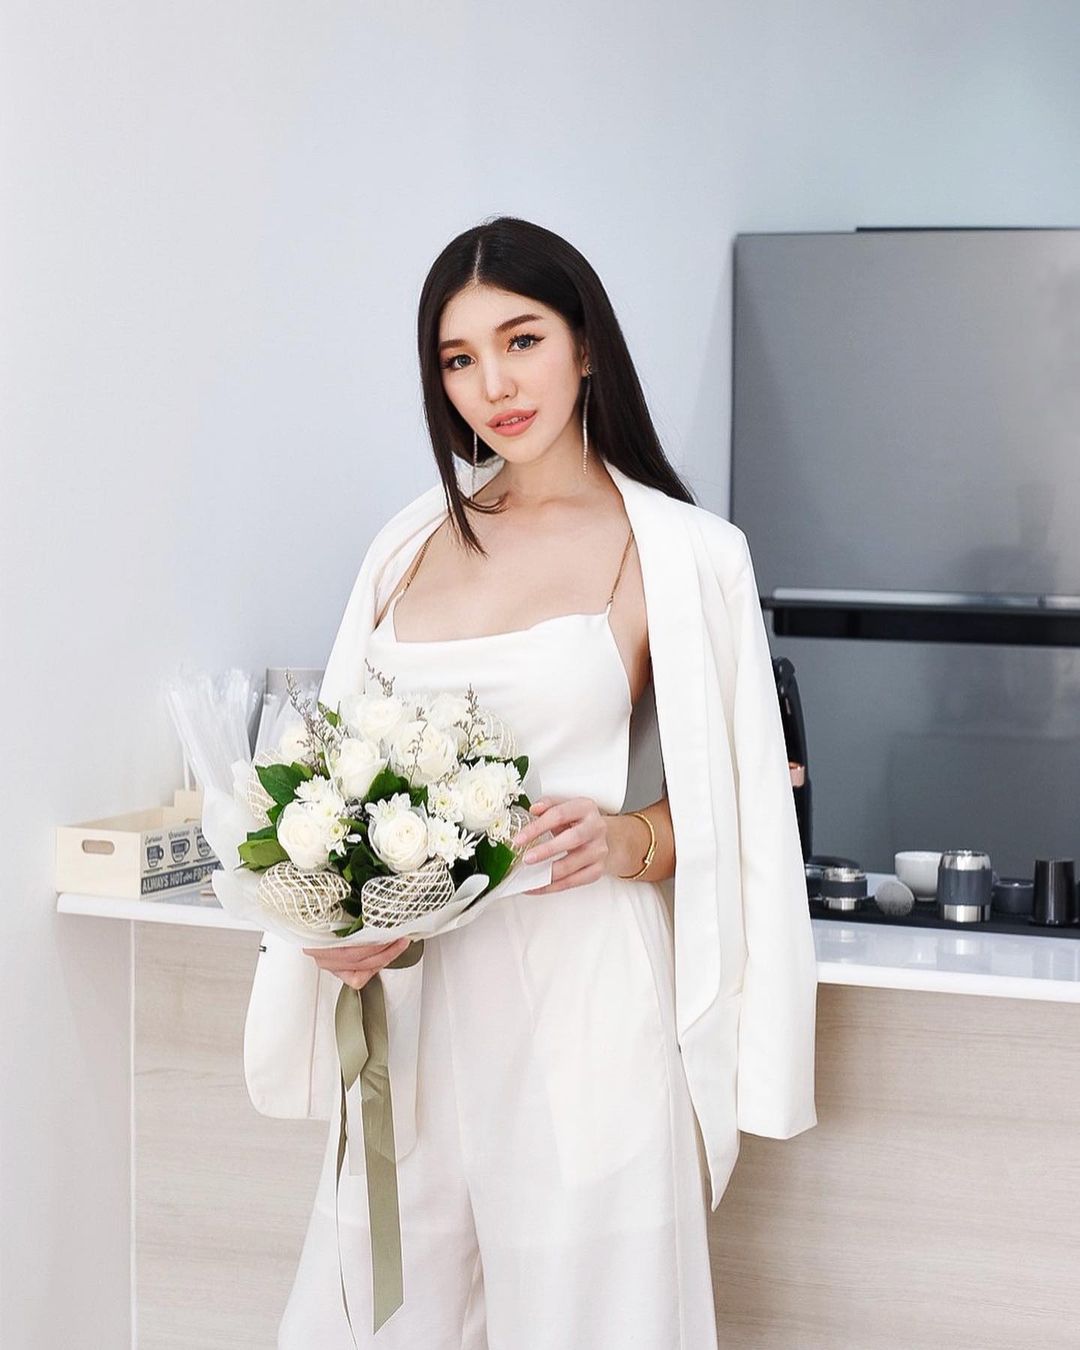 Pepper Hananya – Most Beautiful Thai Trans Model - TG Beauty